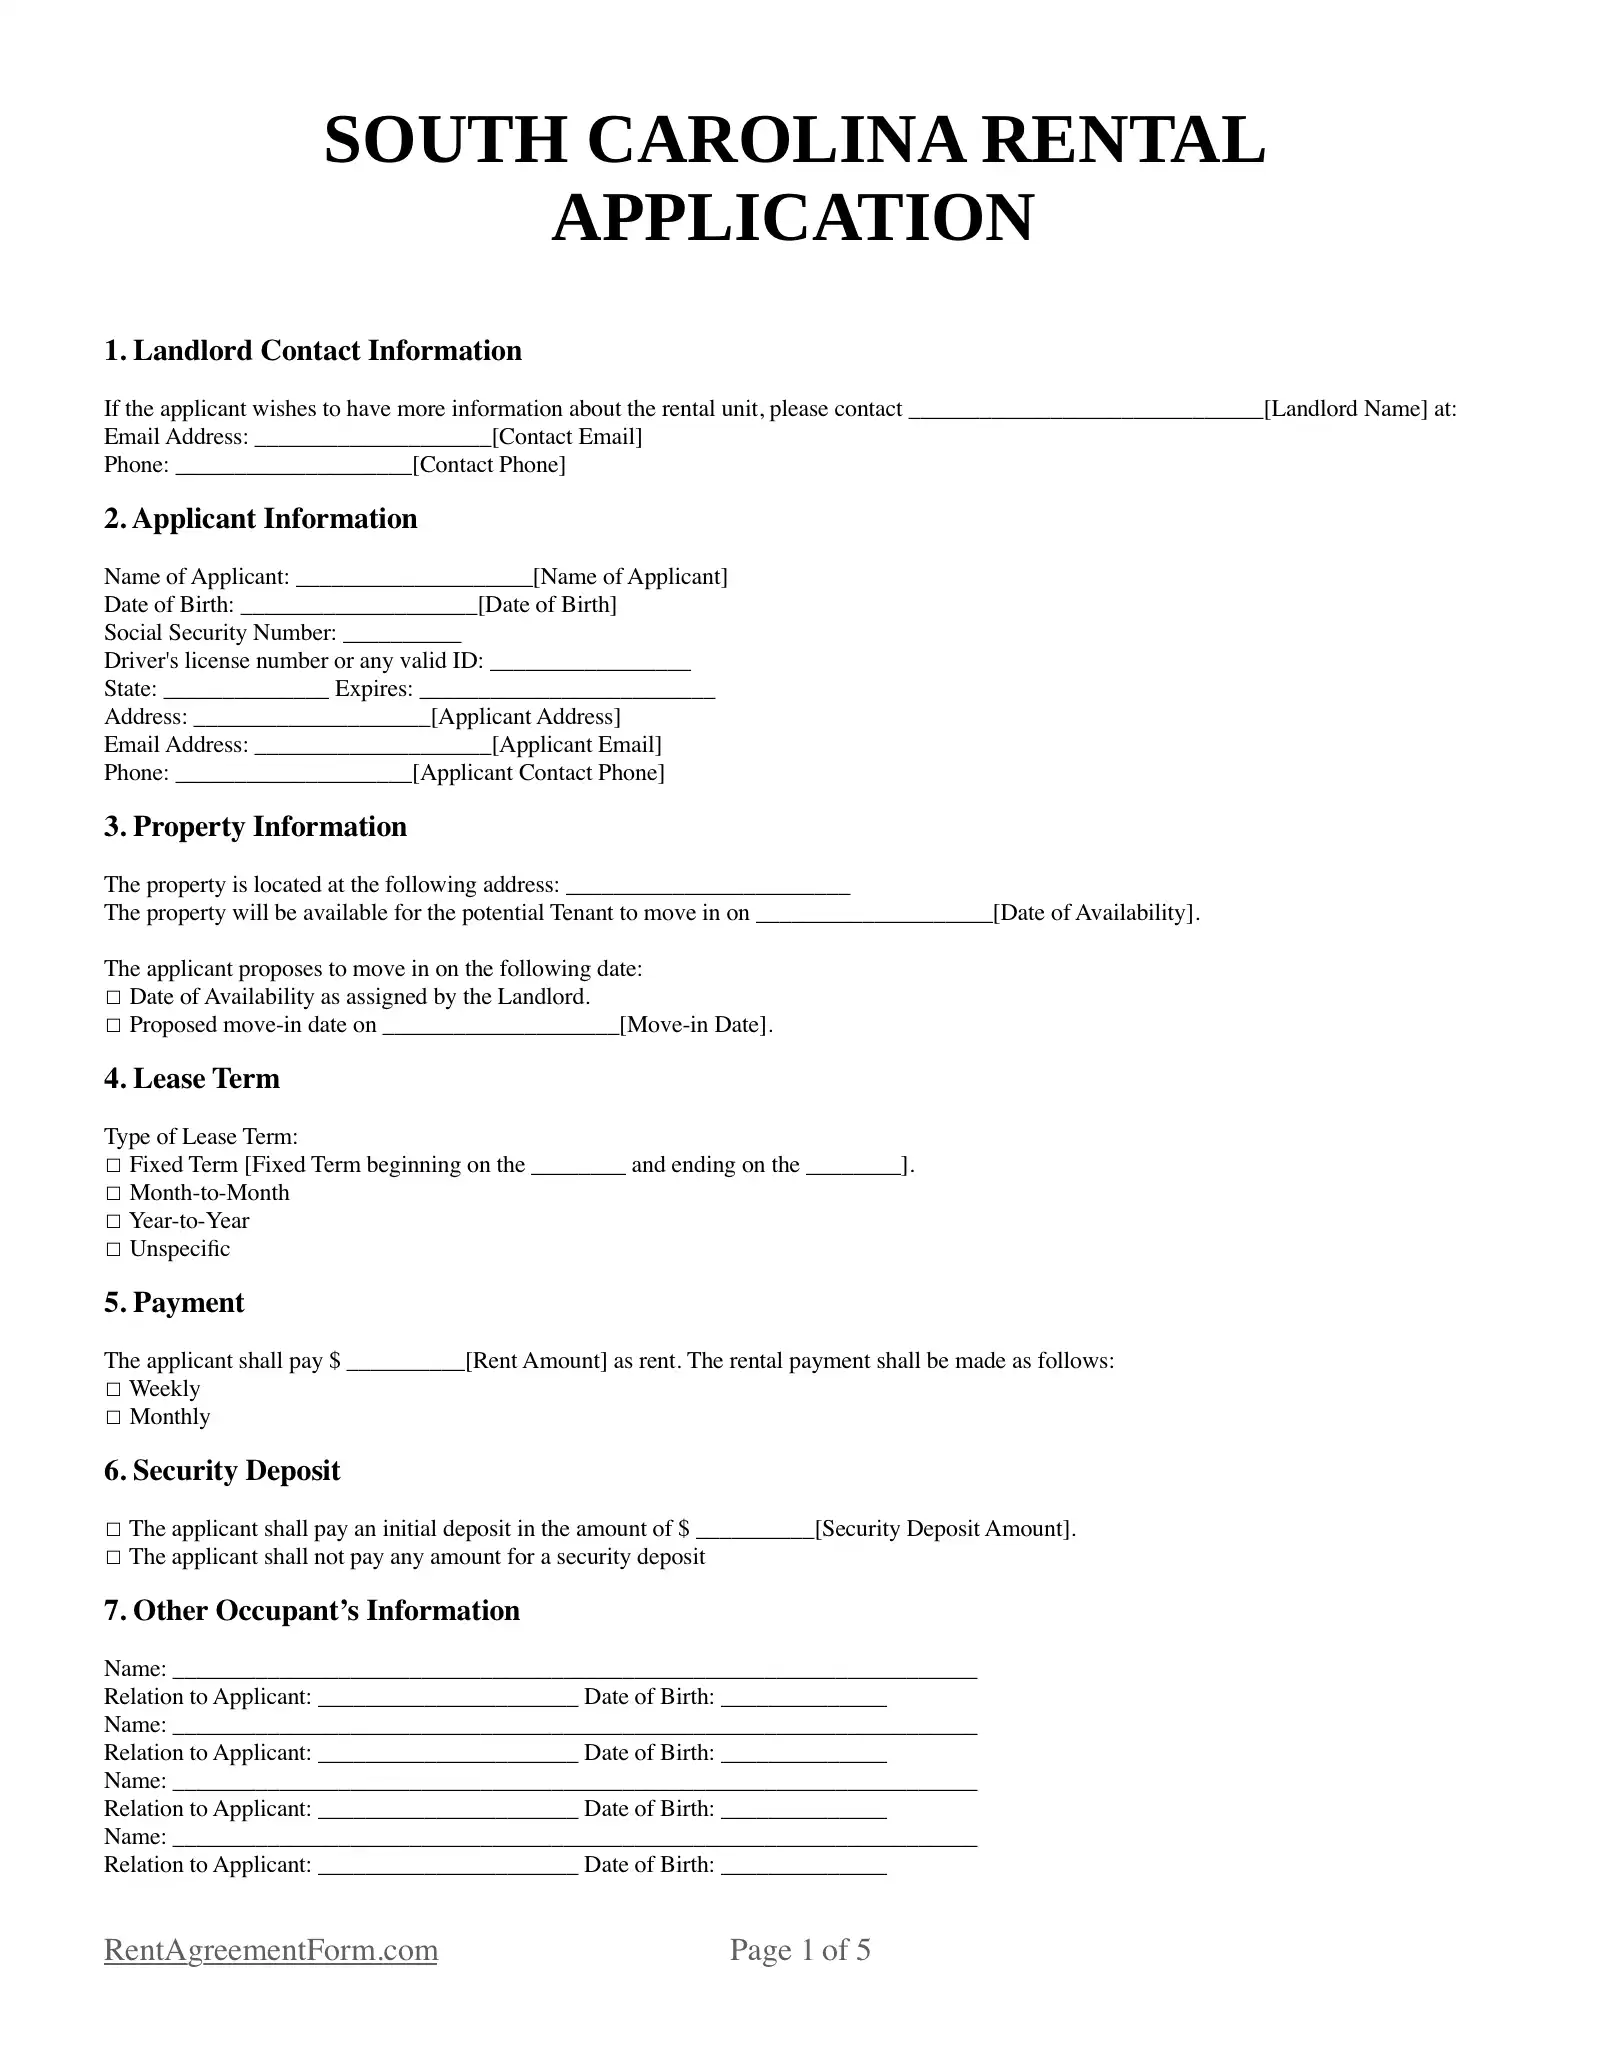 South Carolina Rental Application Sample